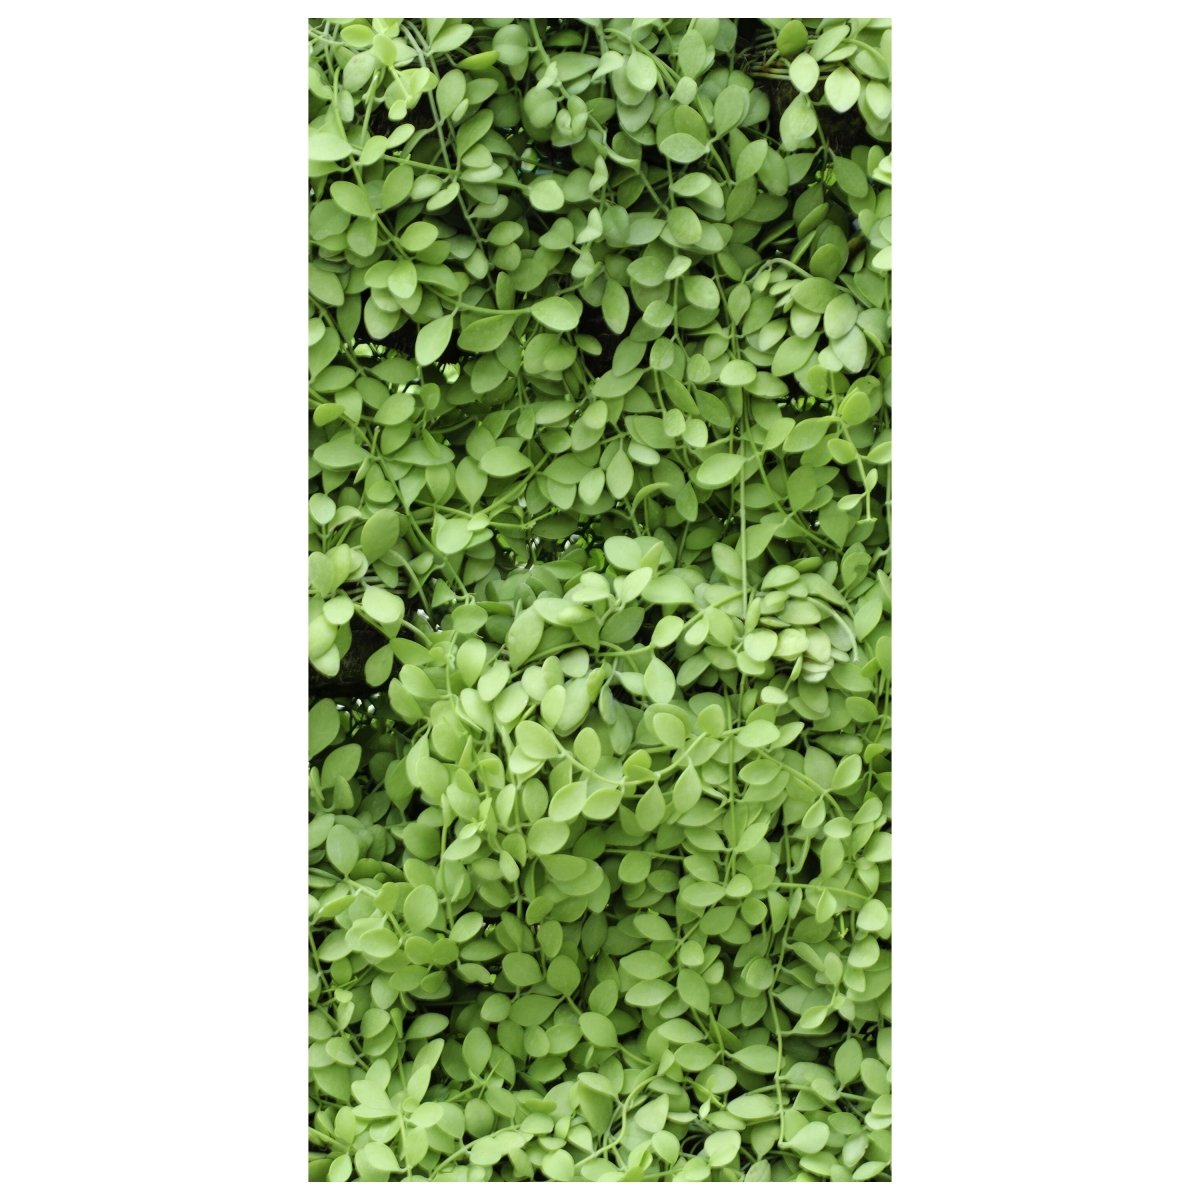 Türtapete Grüne Blätter Wand M1045 - Bild 2